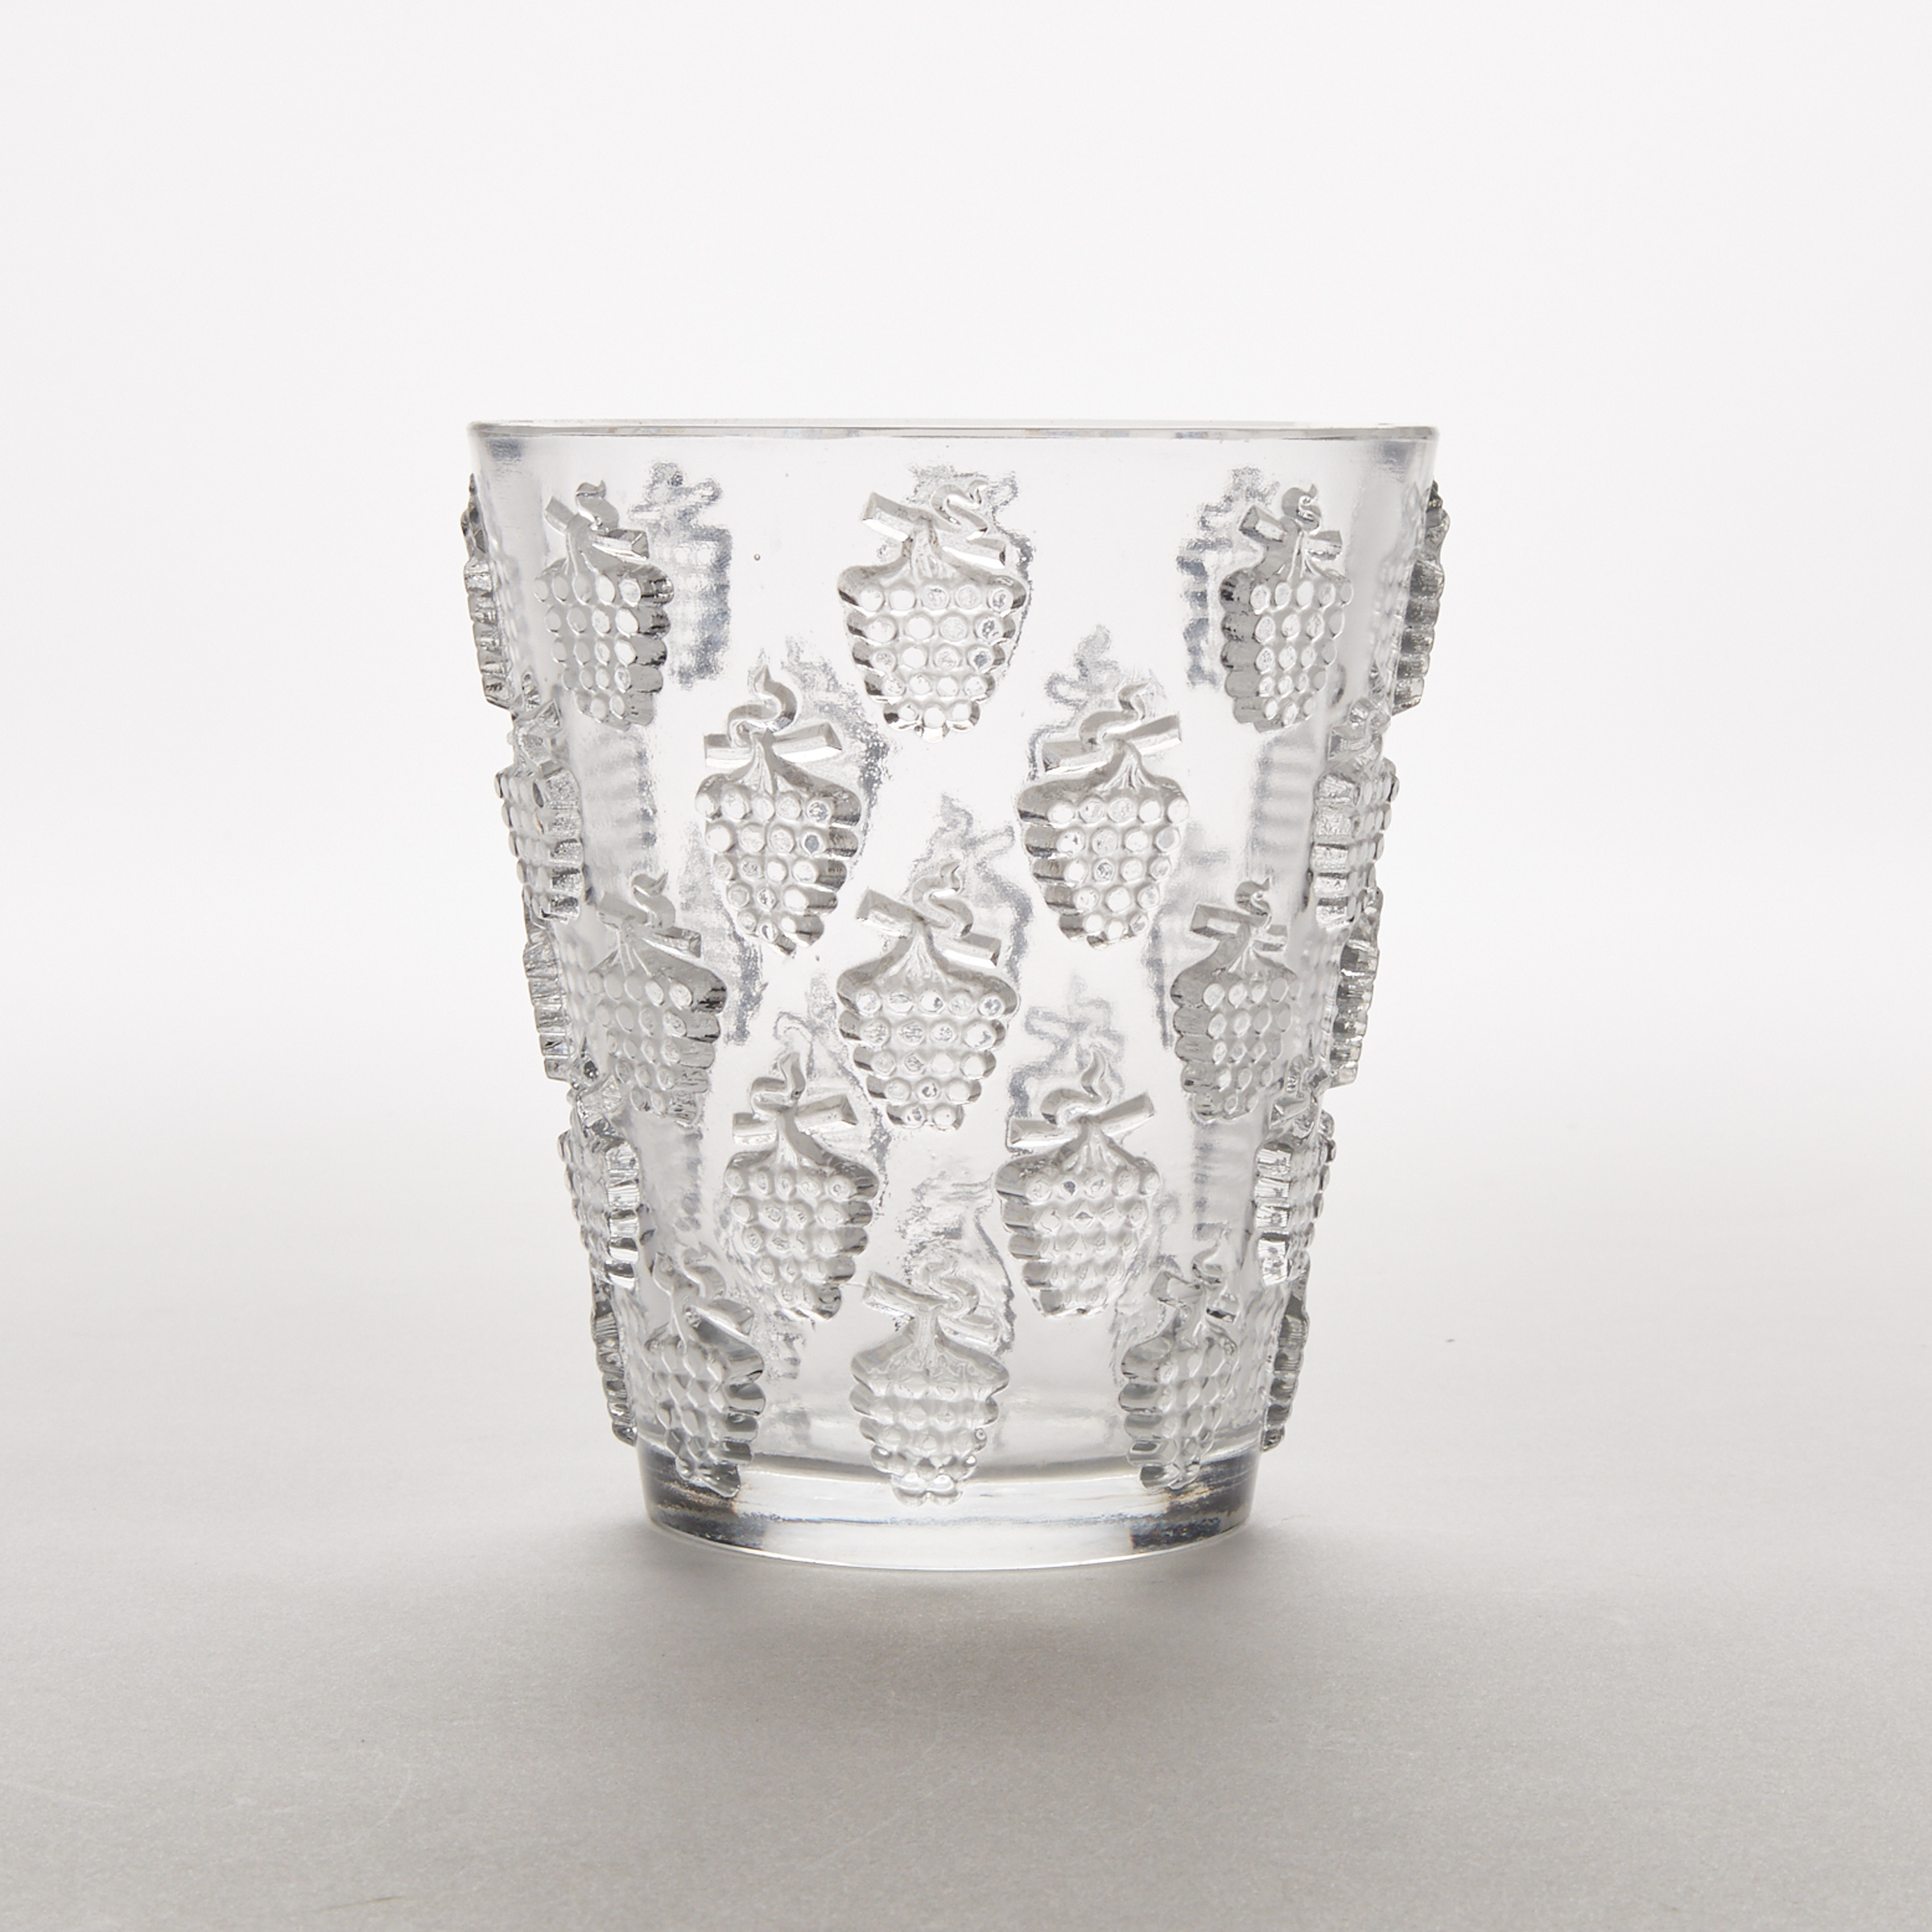 ‘Malaga’, Lalique Moulded Glass Vase, post-1945